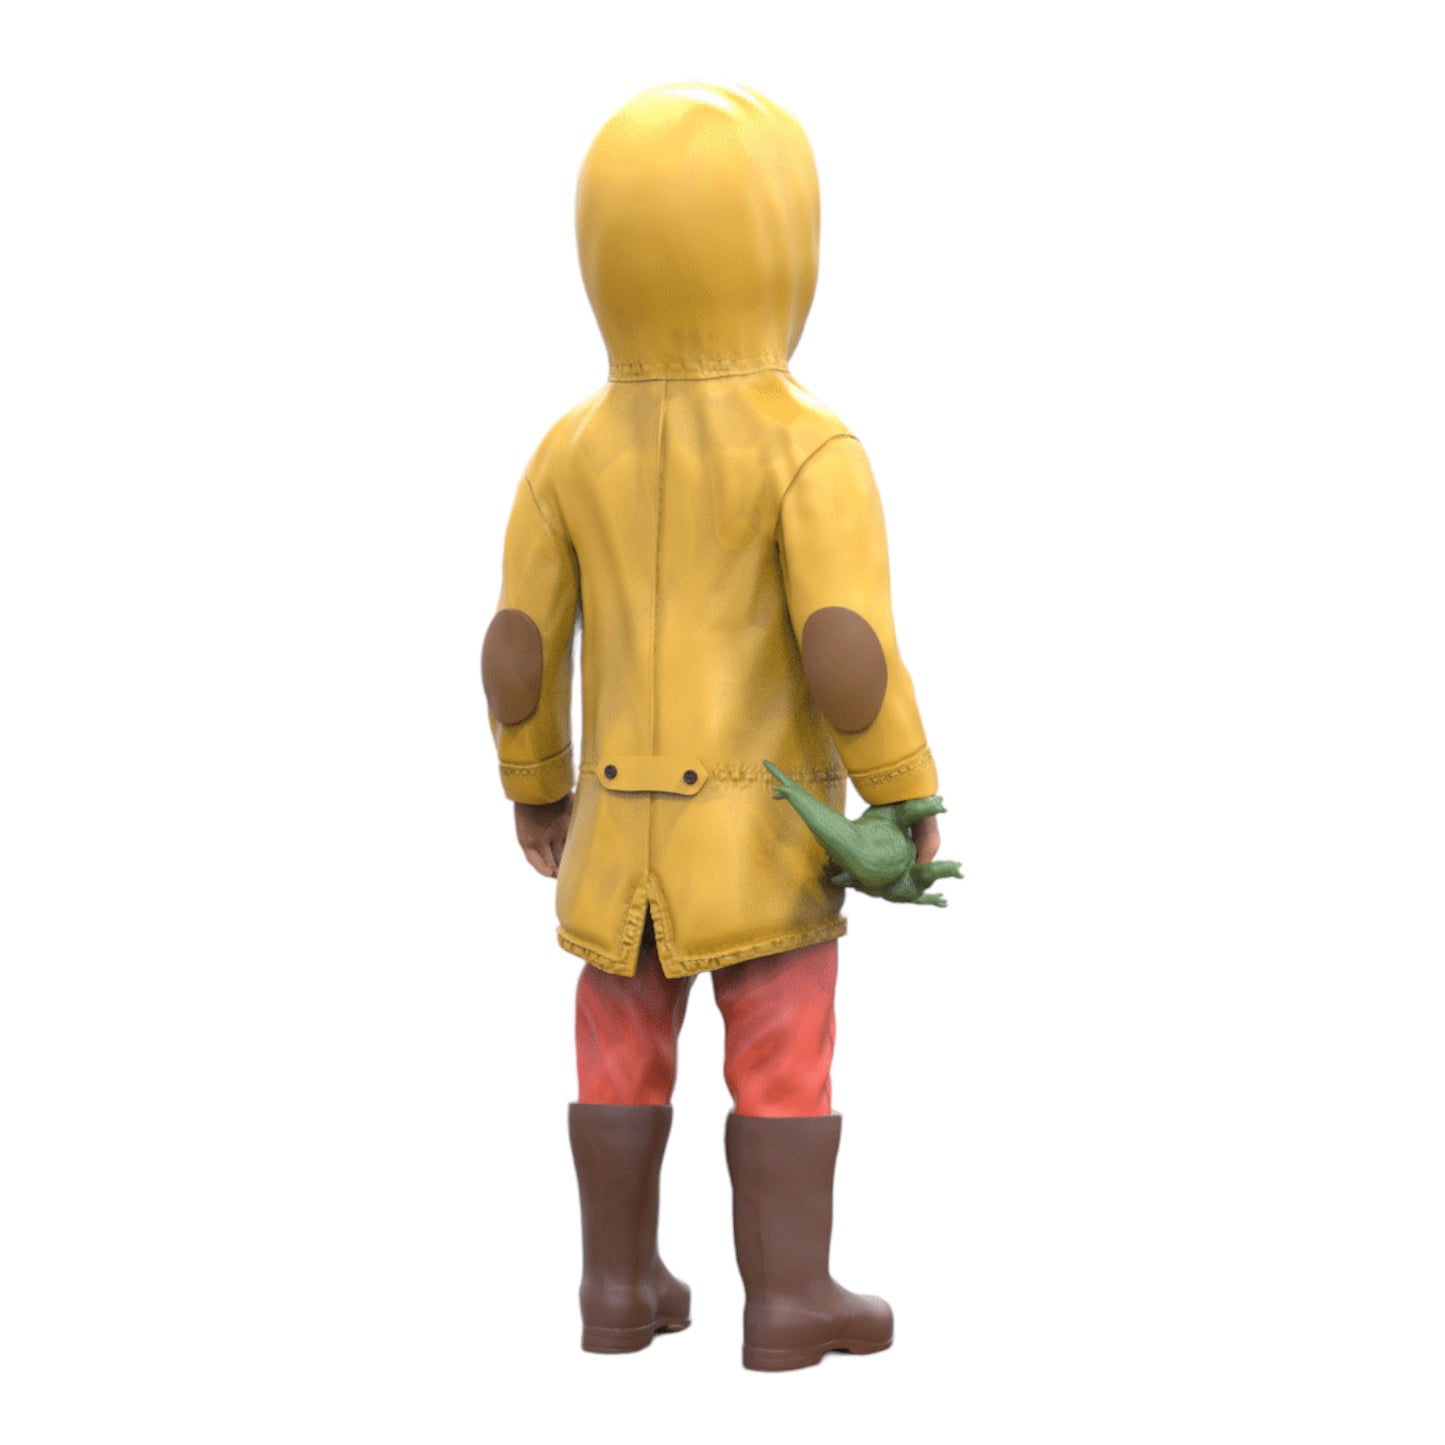 Produktfoto Diorama und Modellbau Miniatur Figur: Kind in Regenjacke